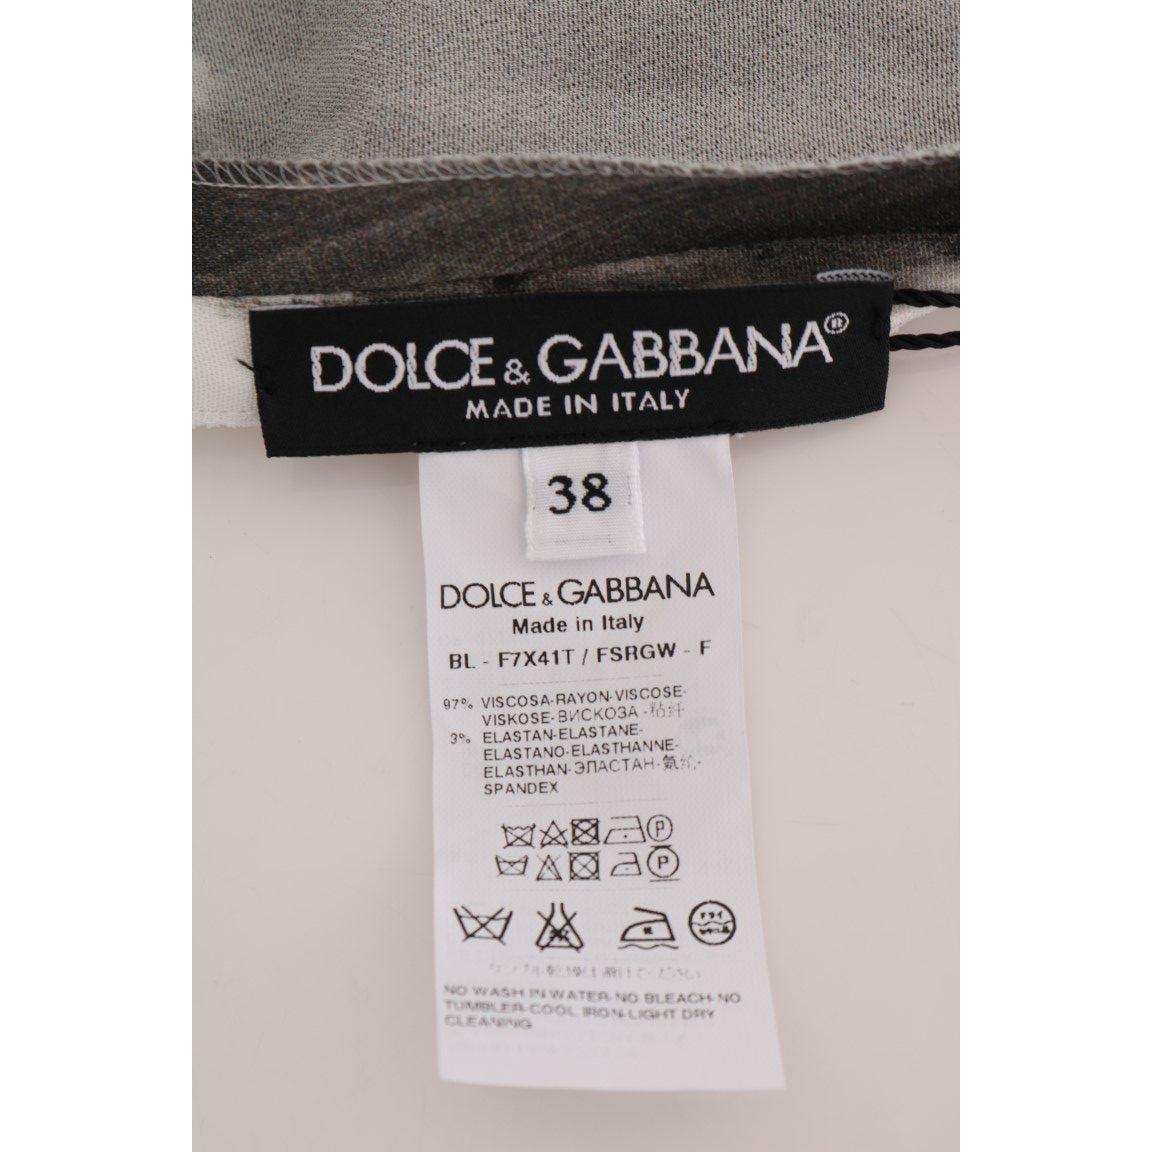 Dolce & Gabbana Elegant Striped Stretch Blouse white-black-striped-printed-blouse-top